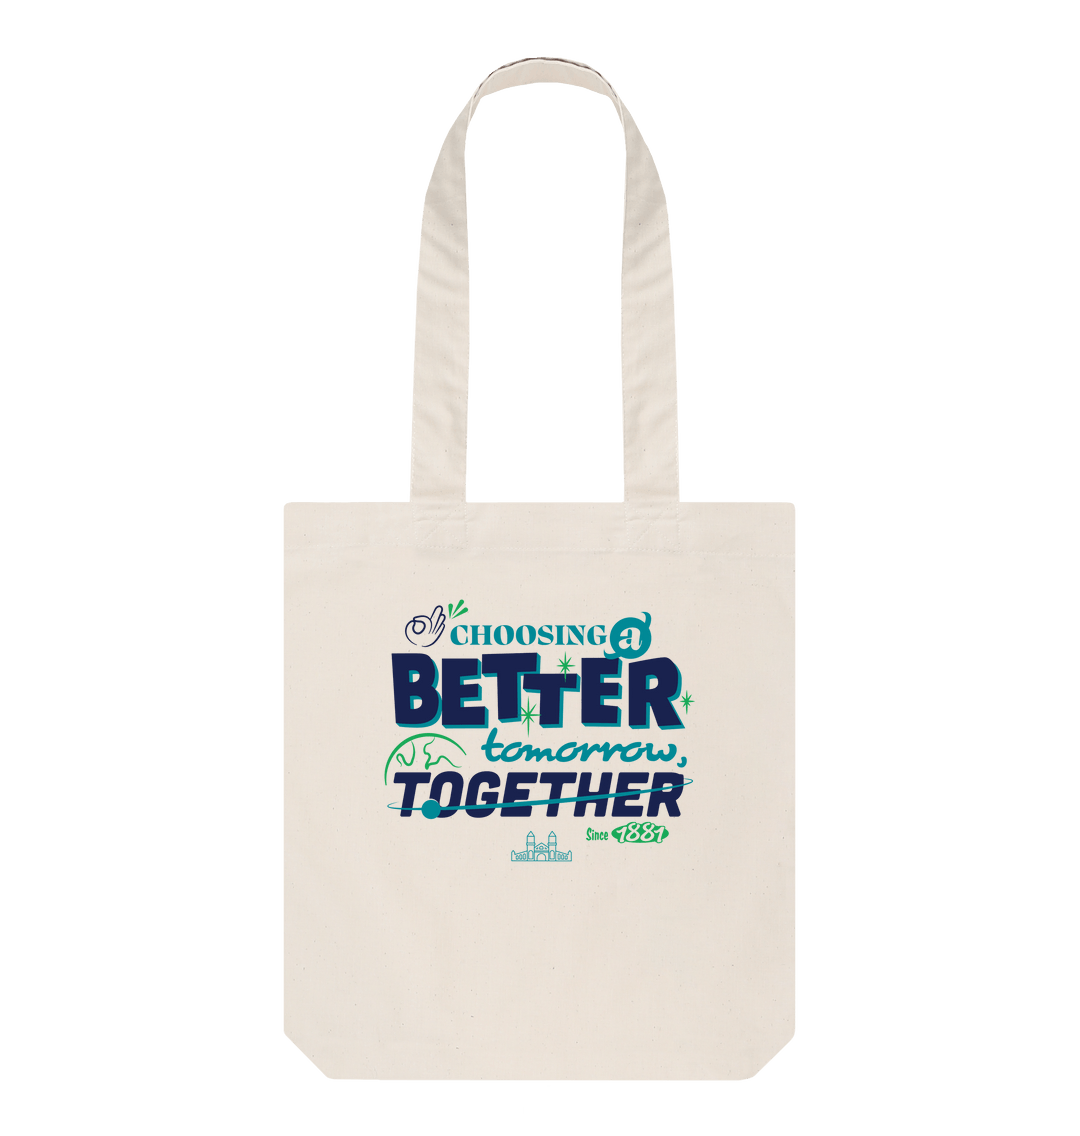 Earth Day Tote Bag, Keep Calm and Recycle Bag, Canvas Tote Bag, Printed  Tote Bag, Market Bag, Shopping Bag, Reusable Grocery Bag 0144 